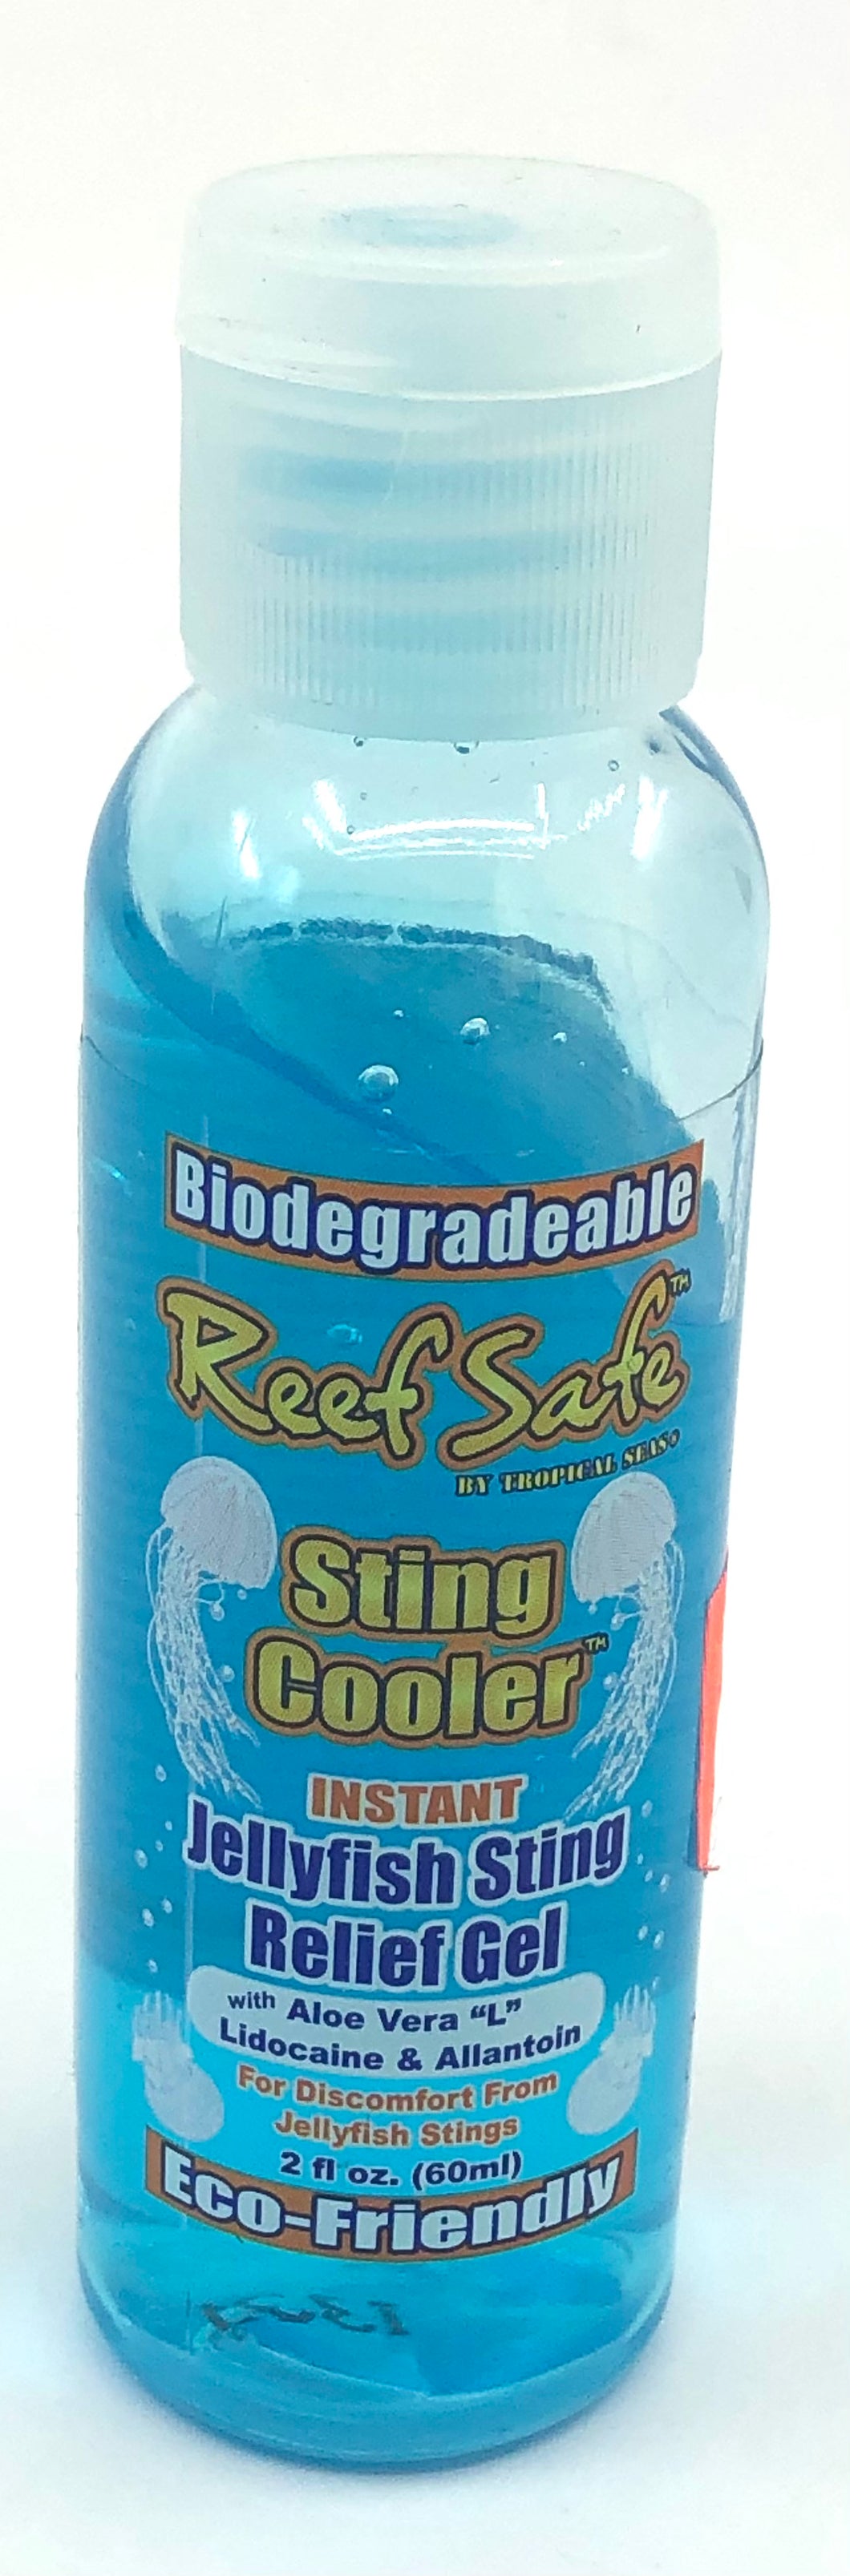 Reef Safe Sting Cooler Jellyfish Sting Relief Gel